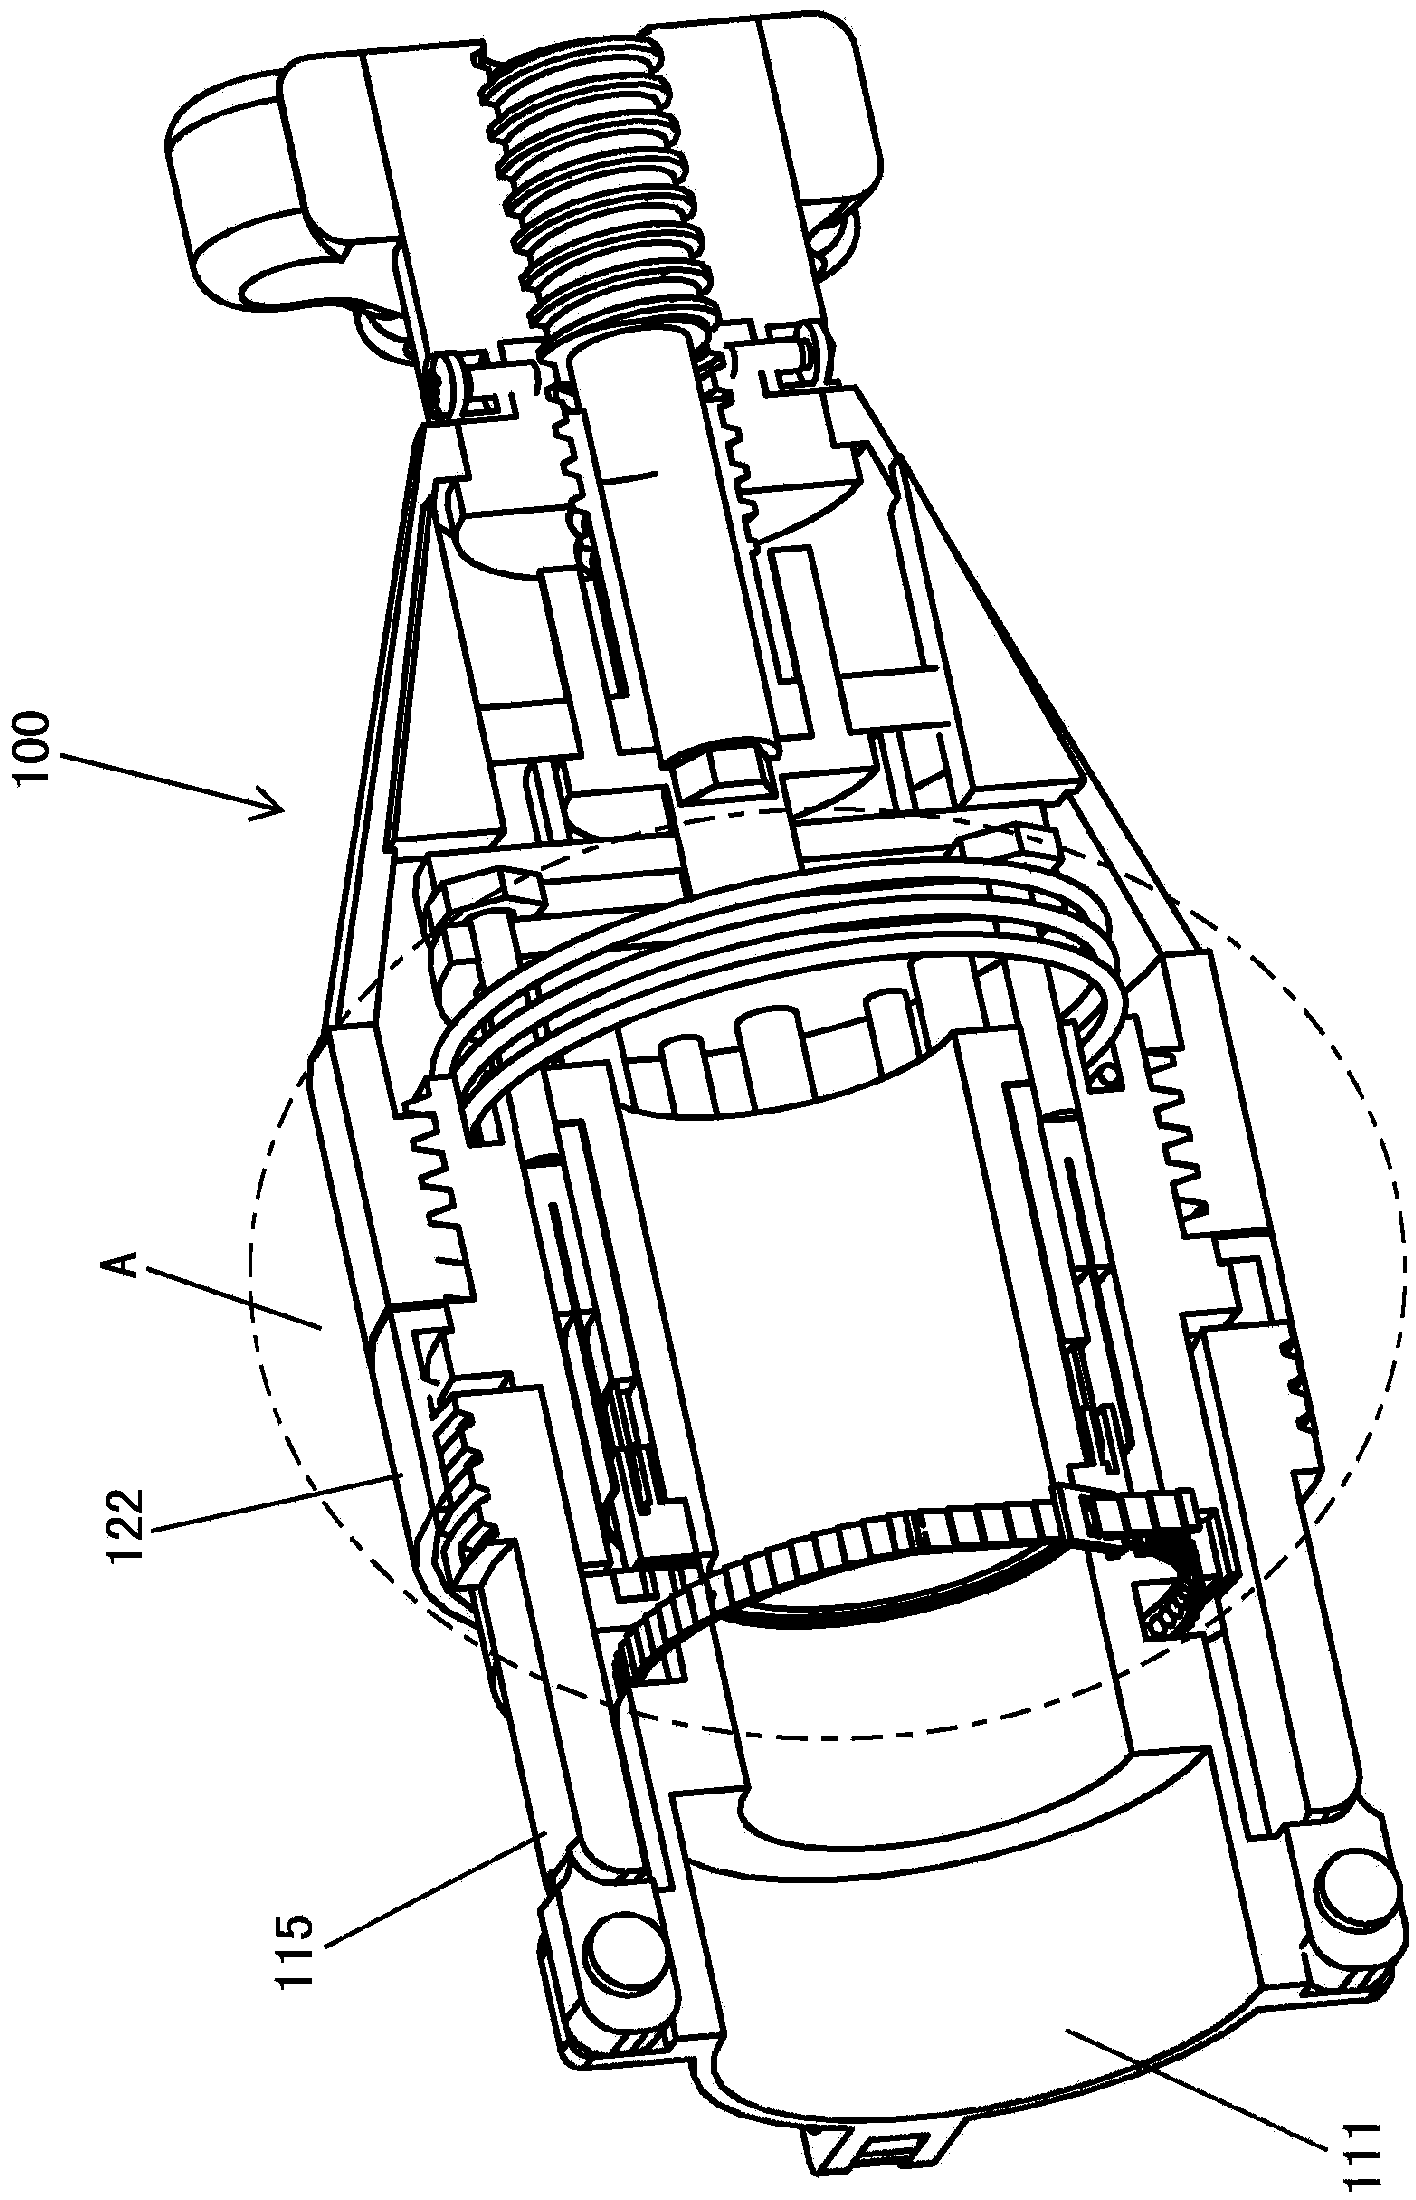 Prepuce girdling device